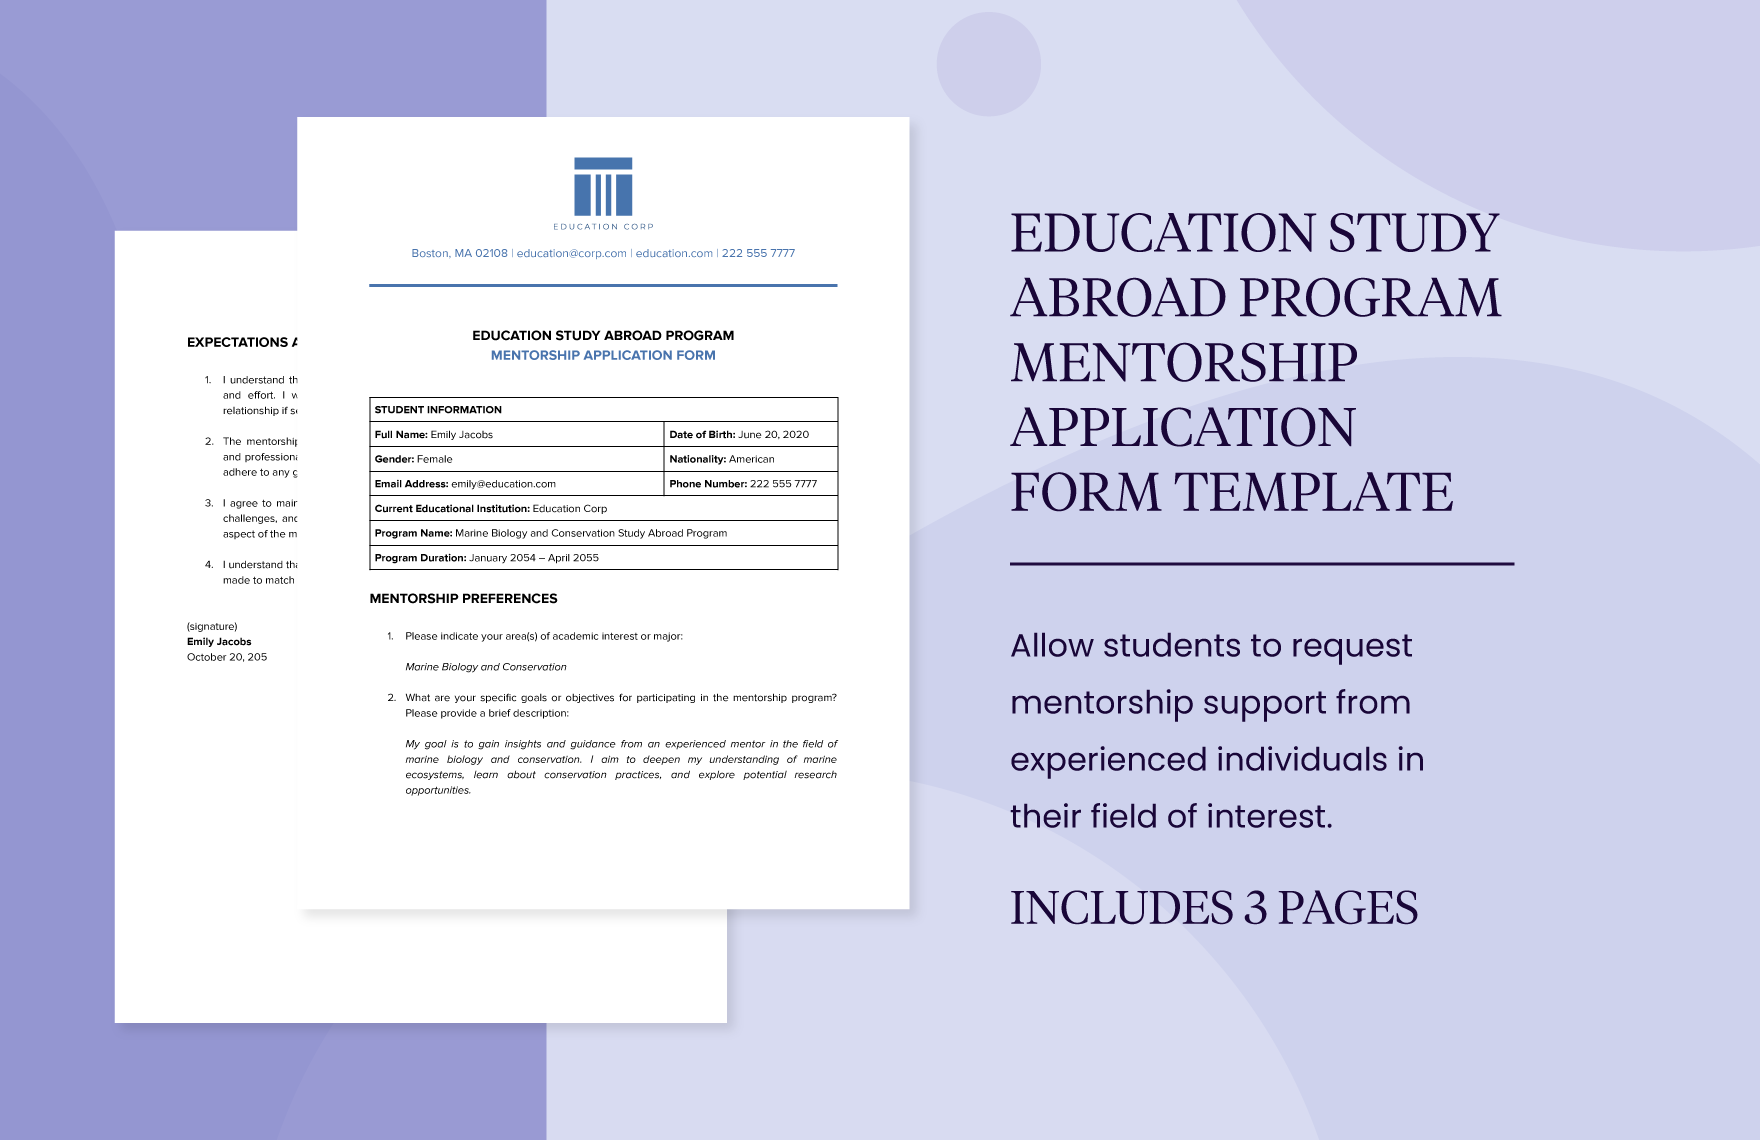 Education Study Abroad Program Mentorship Application Form Template